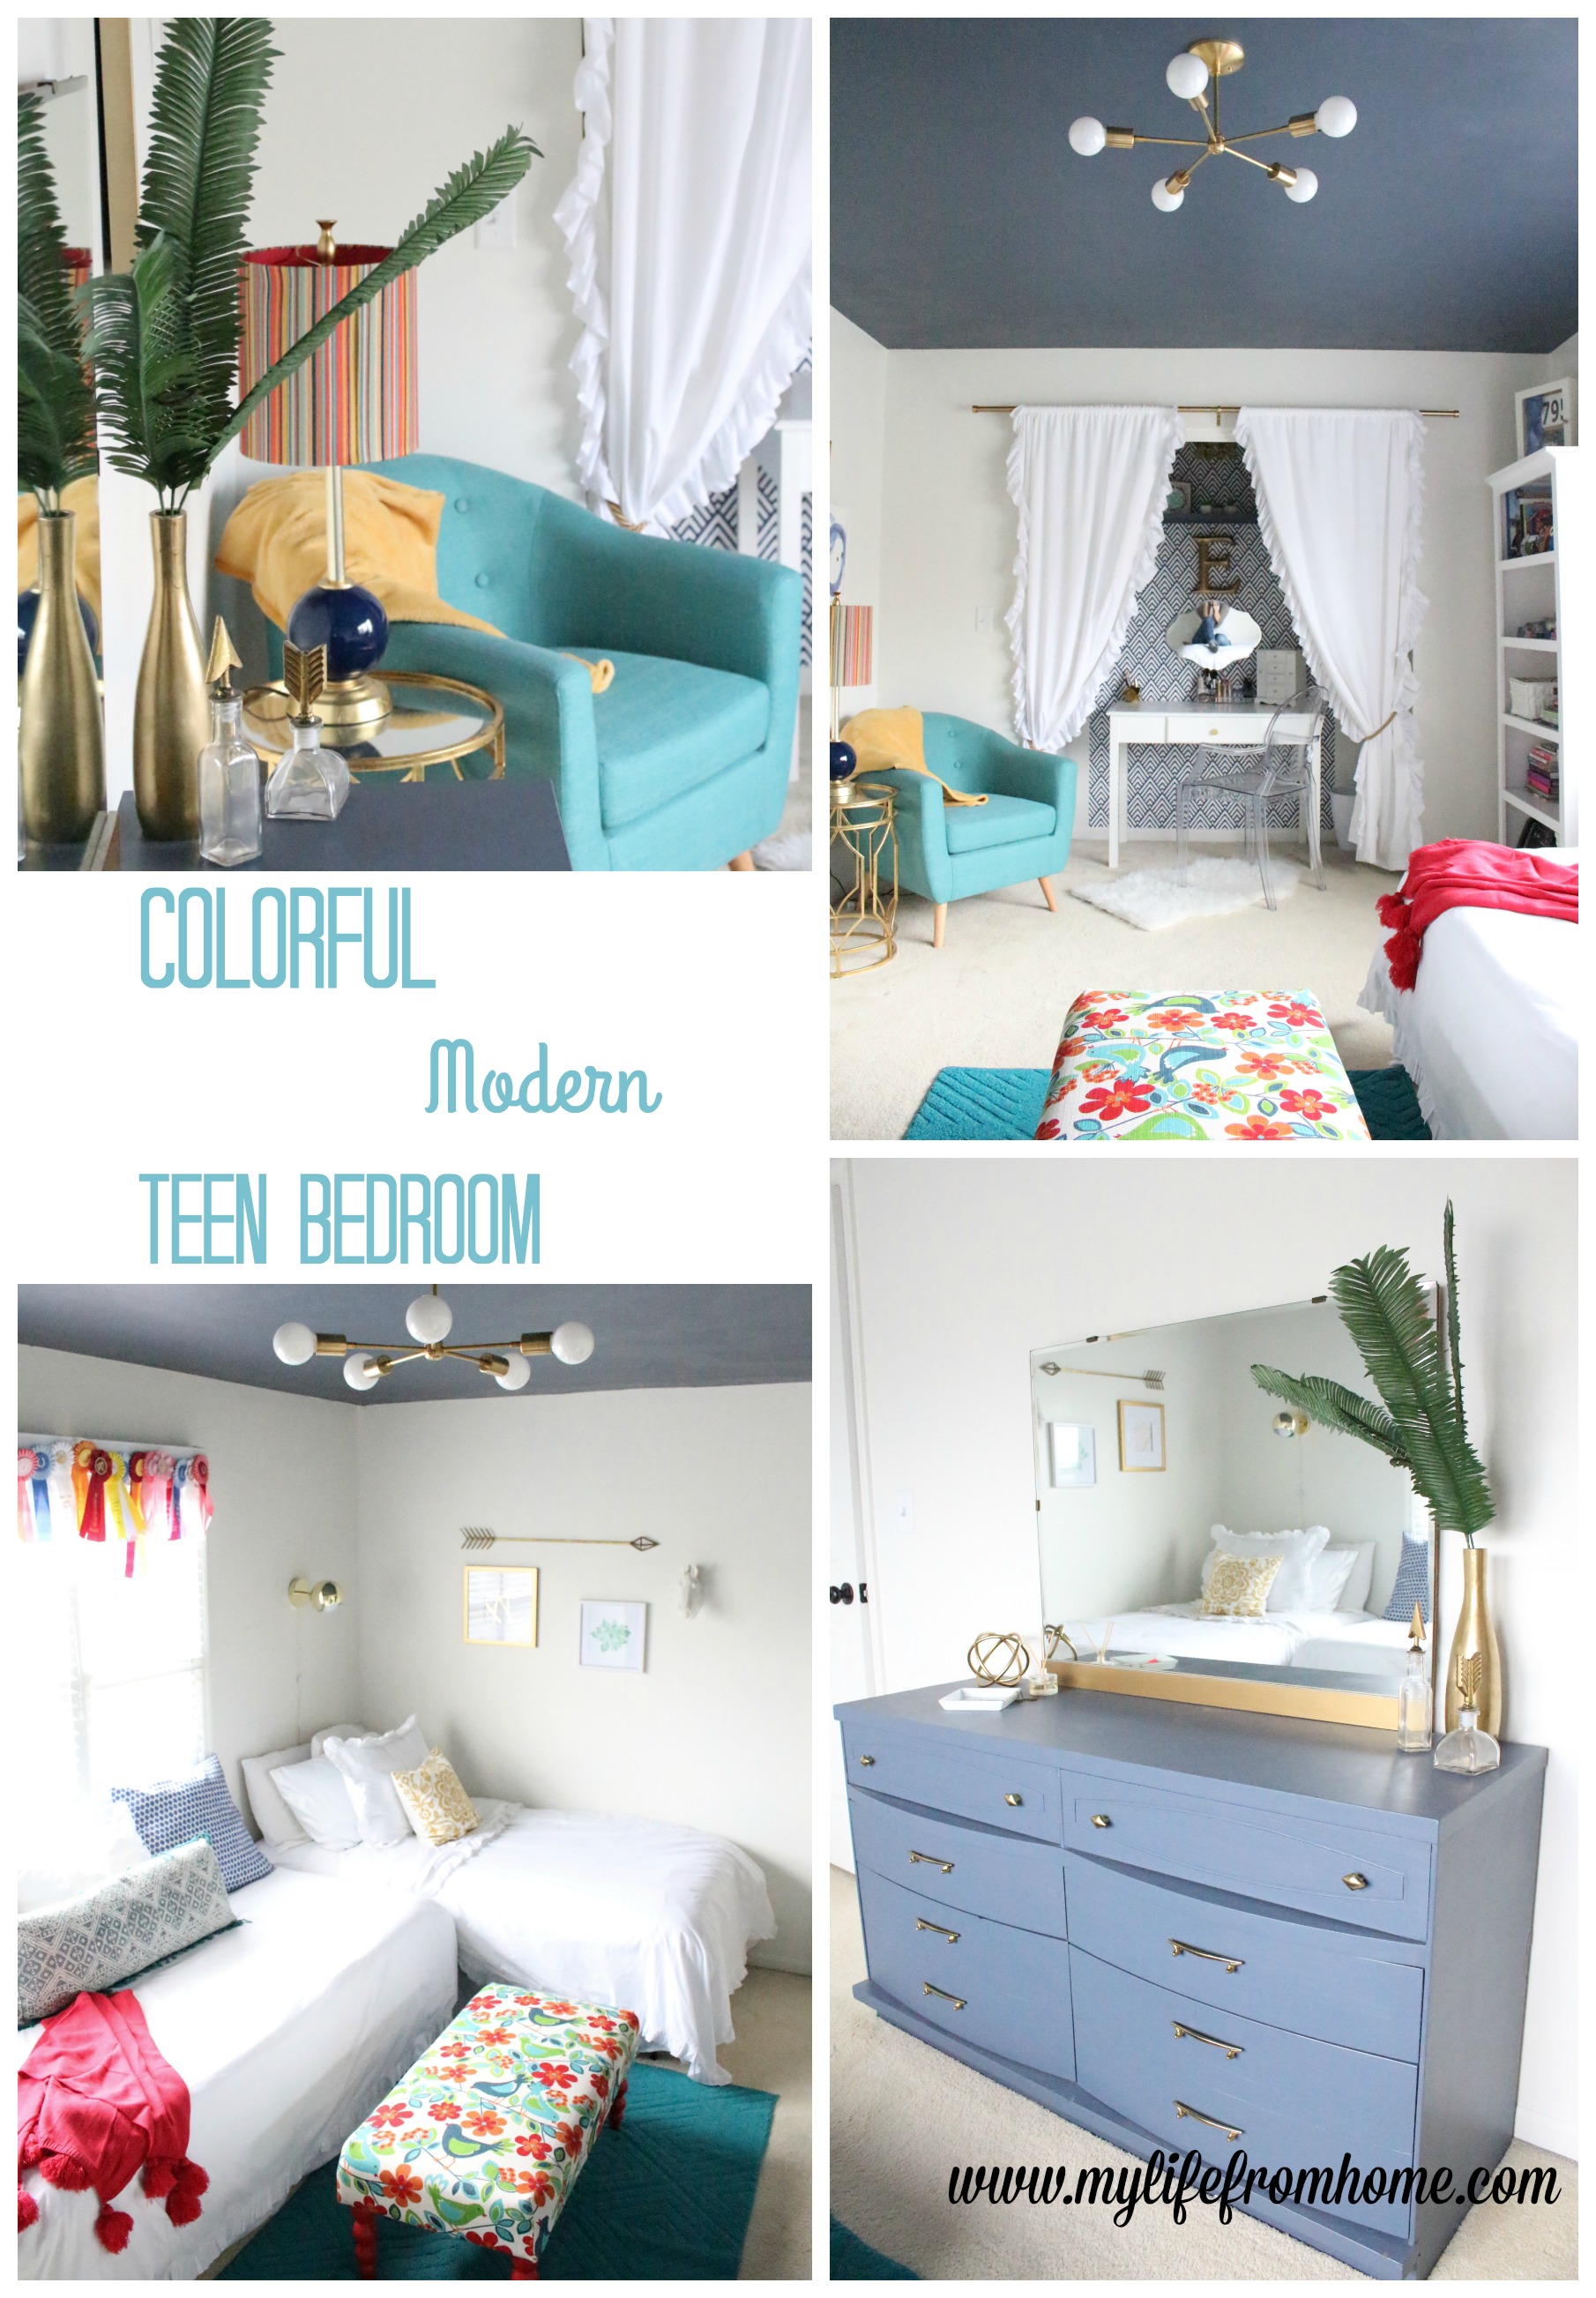 bedroom-colorful-modern-teen-bedroom-reveal-bedroom-redo-teen-bedroom-kids-bedrooms-modern-decor-color-gold-decor-home-decorating-bedroom-redecorating-one-room-challenge